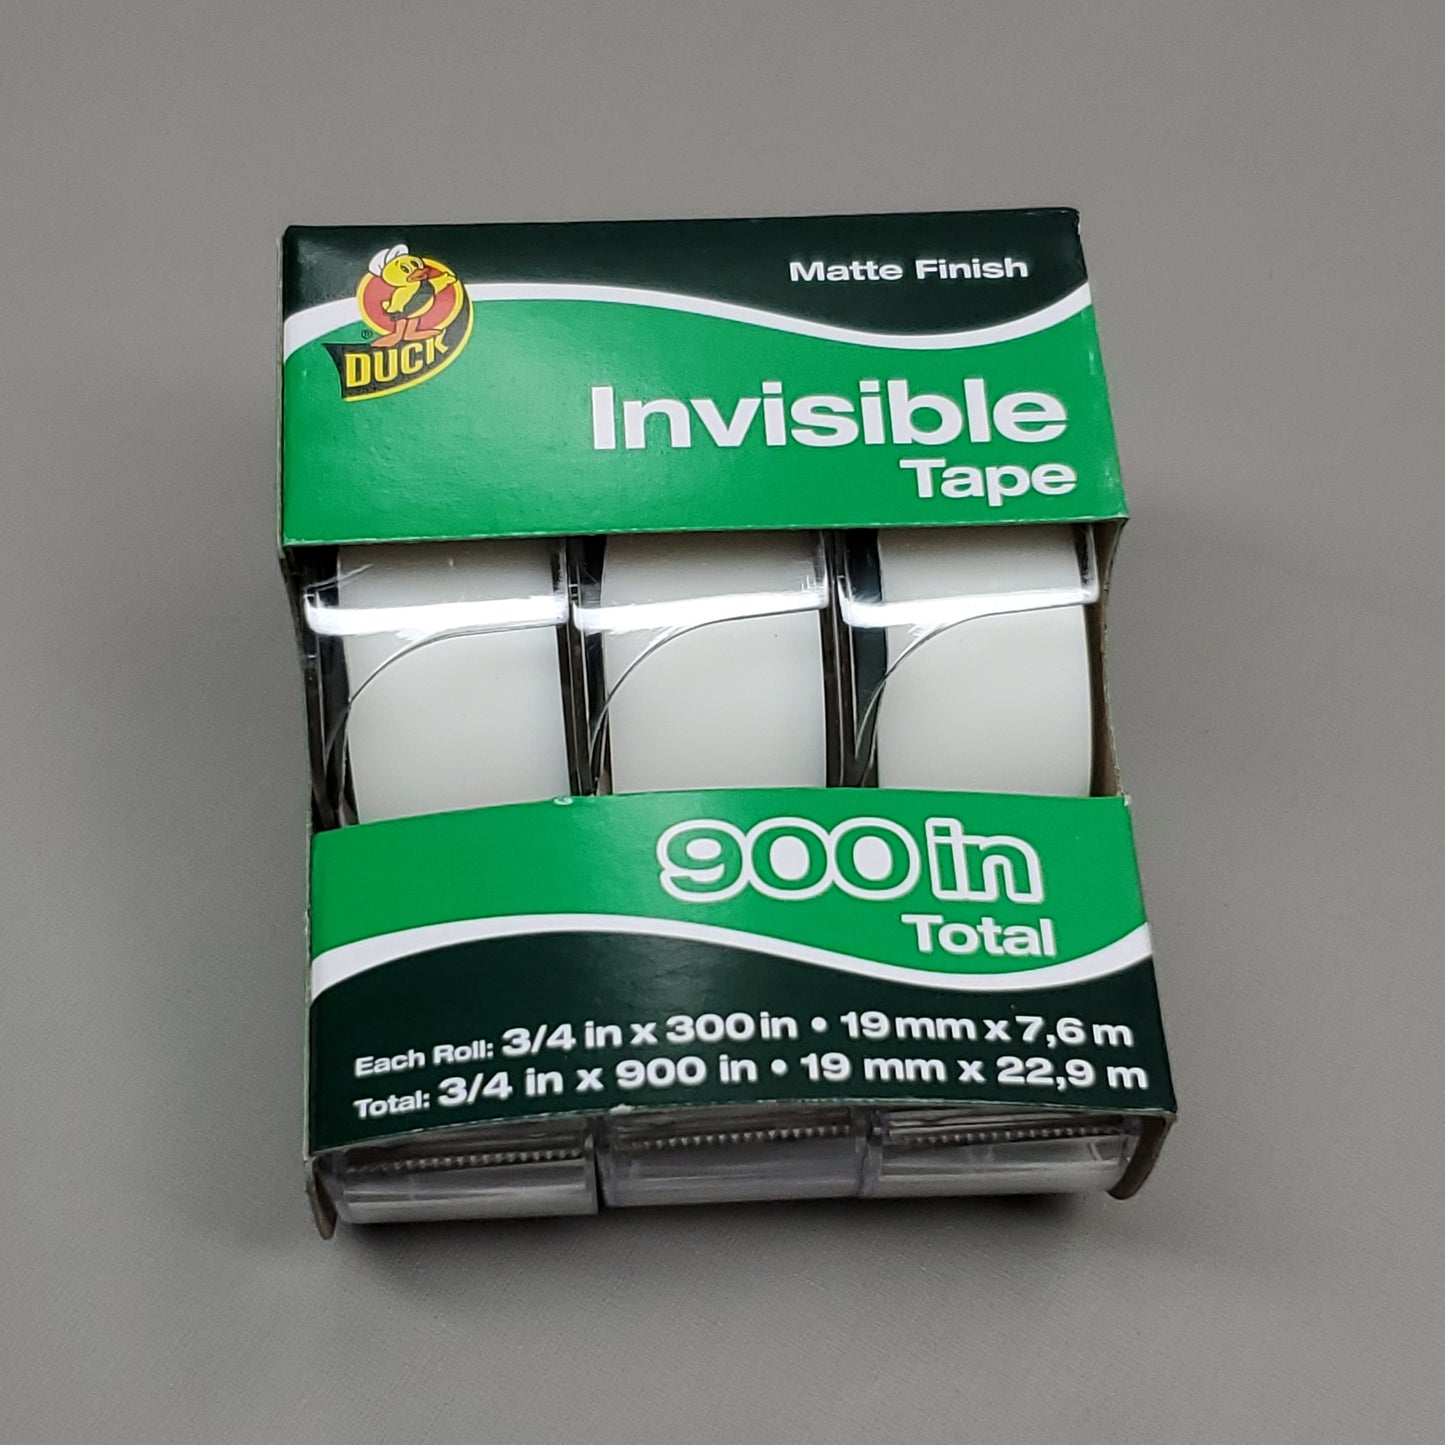 SHURTAPE DUCK TAPE 18 PK of Invisible Tape 3/4"X300" Matte Finish 285195 (New)